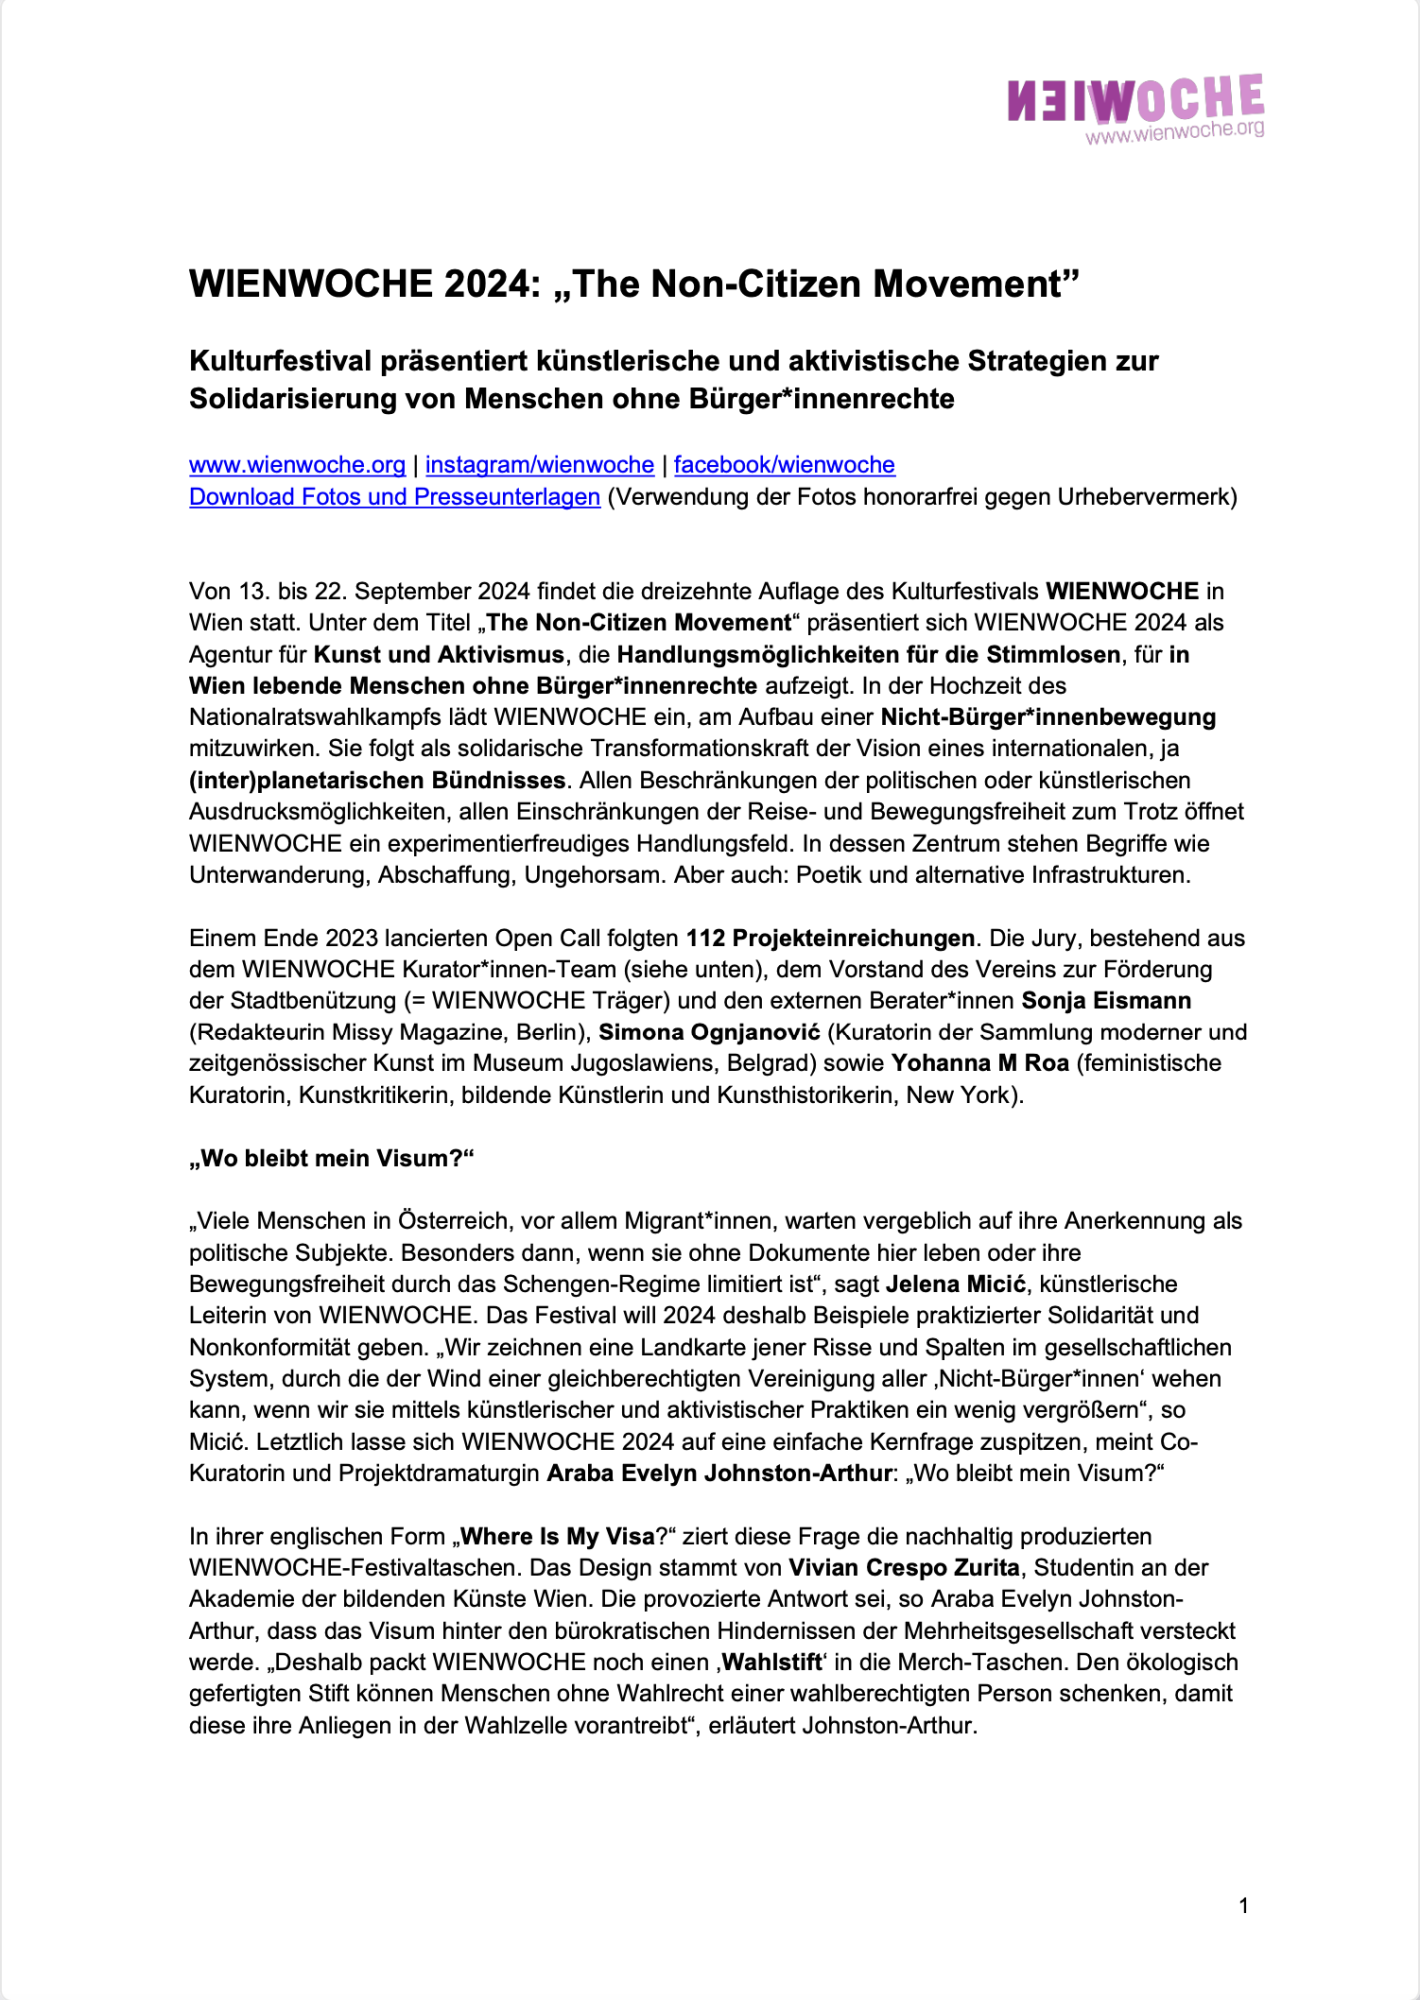 PDF about Mediainformation of WIENWOCHE 2024